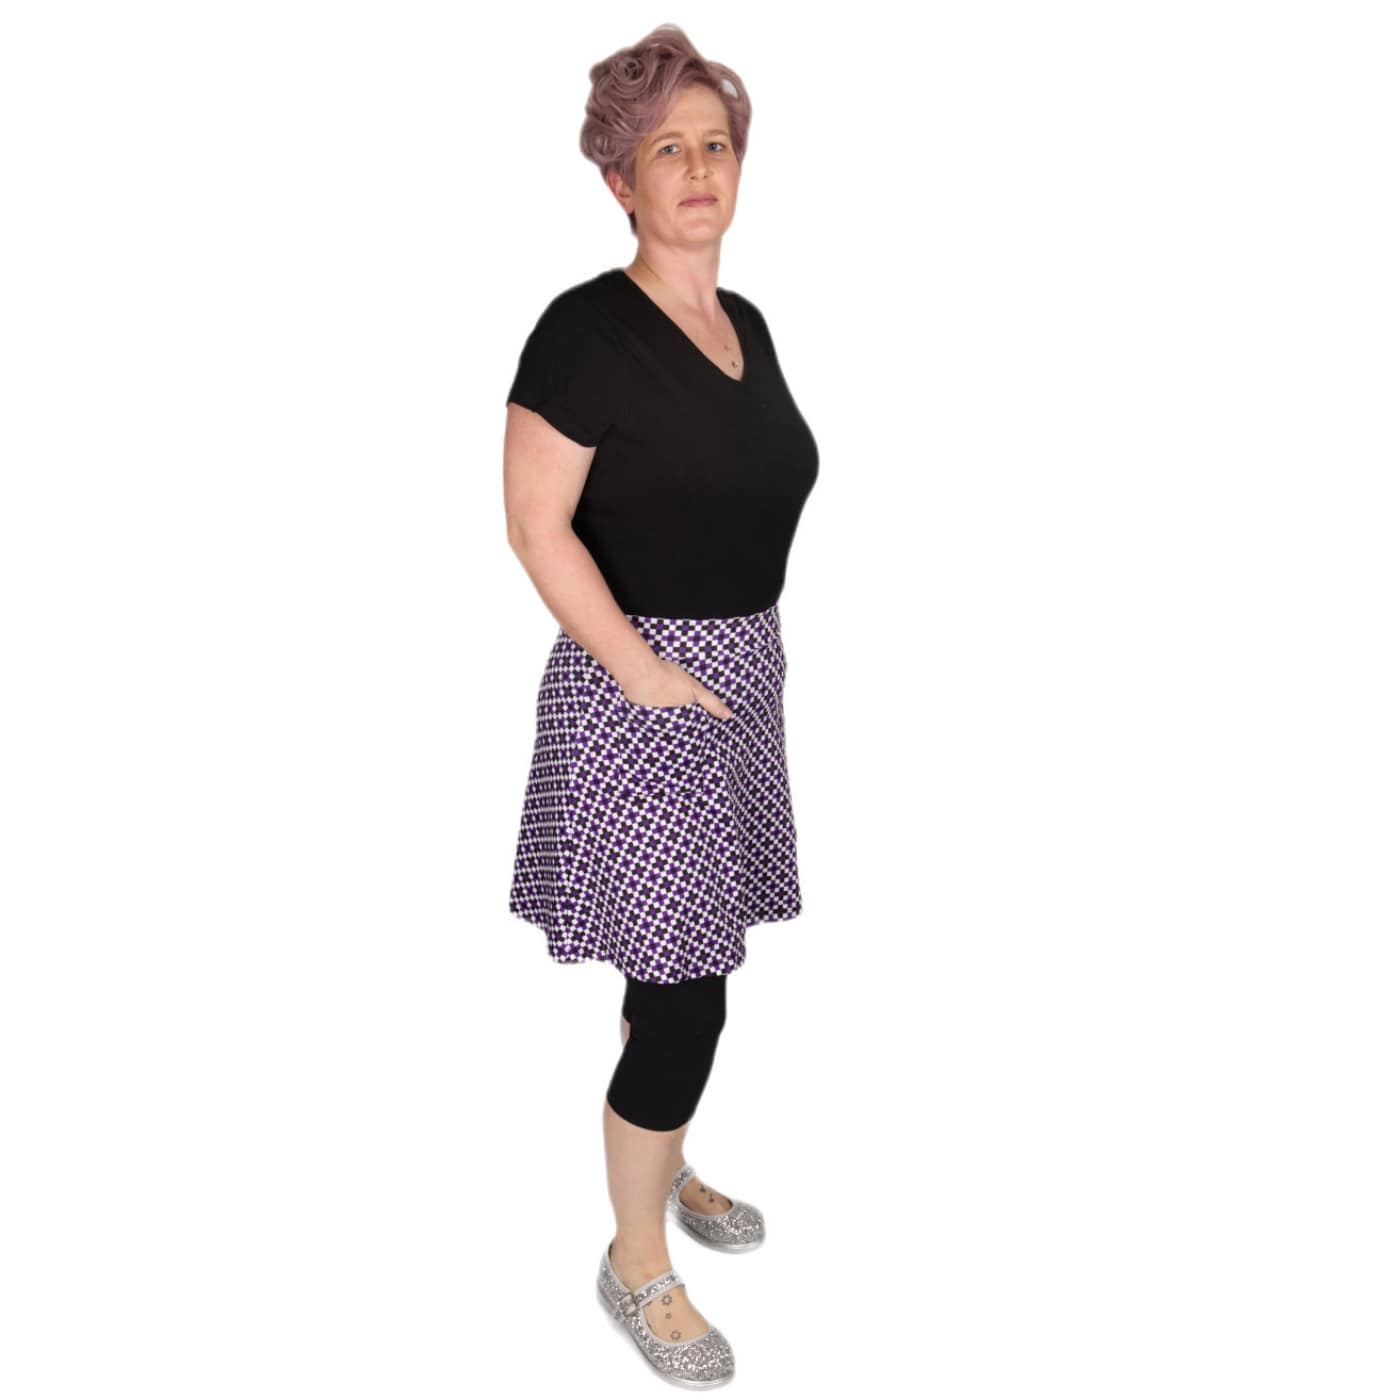 Purple Check Short Skirt by RainbowsAndFairies.com.au (Check Print - Purple - Black - White - Kitsch - Aline Skirt With Pockets - Vintage Inspired) - SKU: CL_SHORT_CHECK_PUR - Pic-06